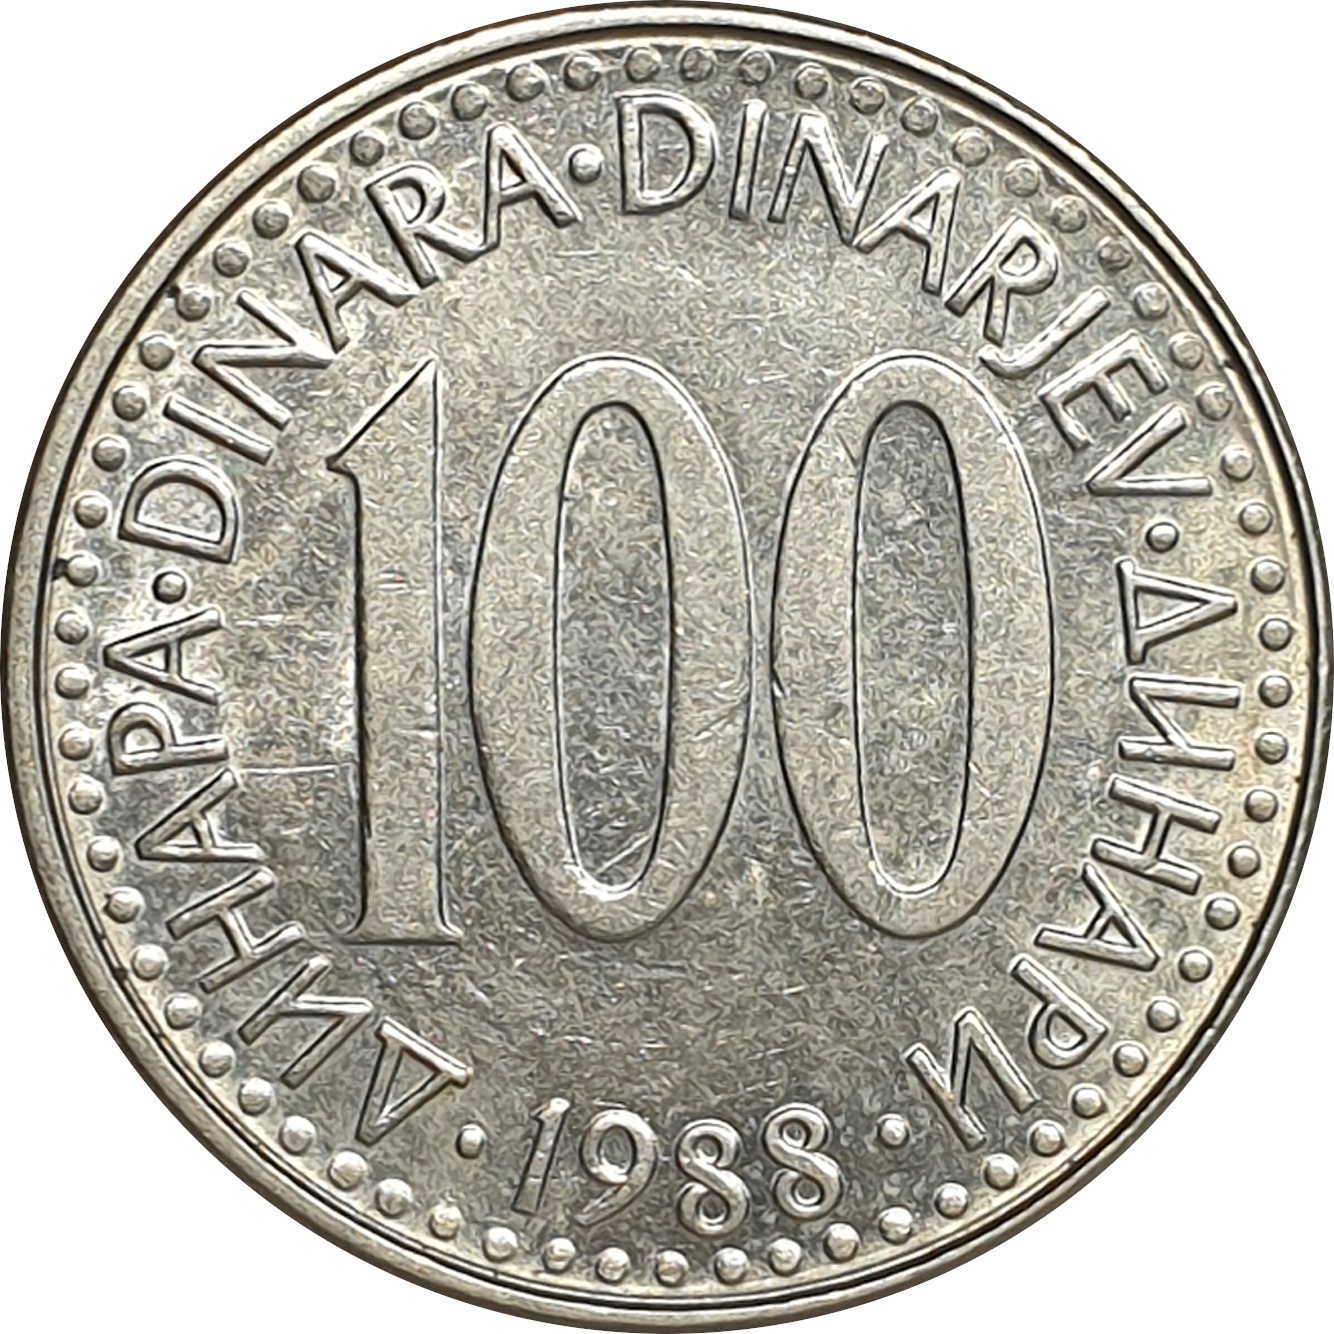 100 dinara - Emblem - 1985 issue